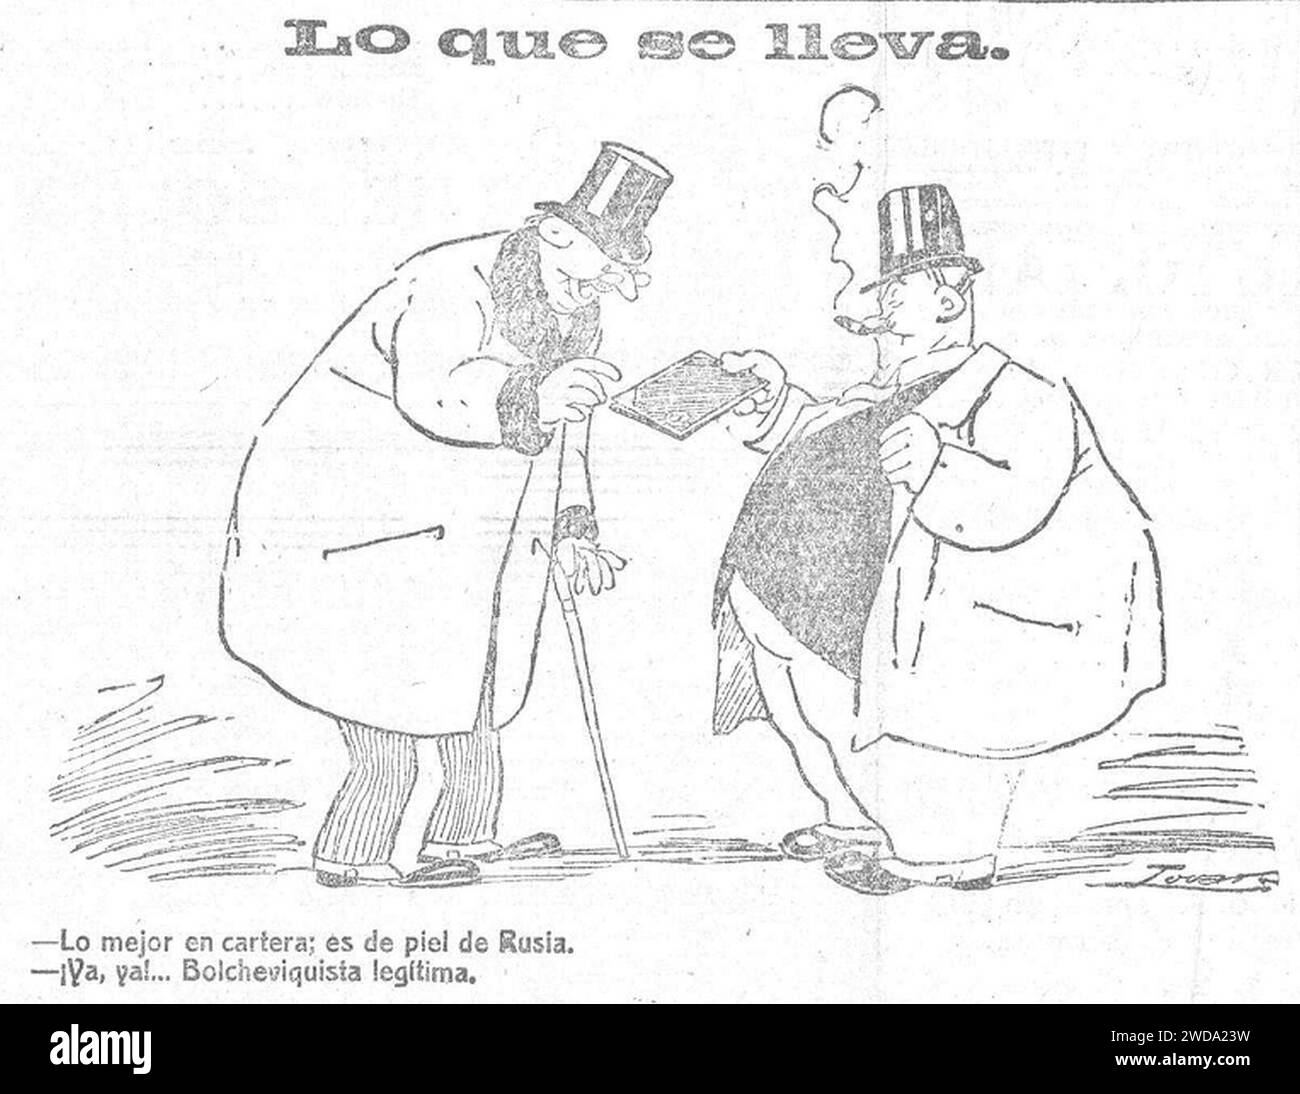 1919-01-06, Heraldo de Madrid, Lo que se lleva, Tovar. Stock Photo